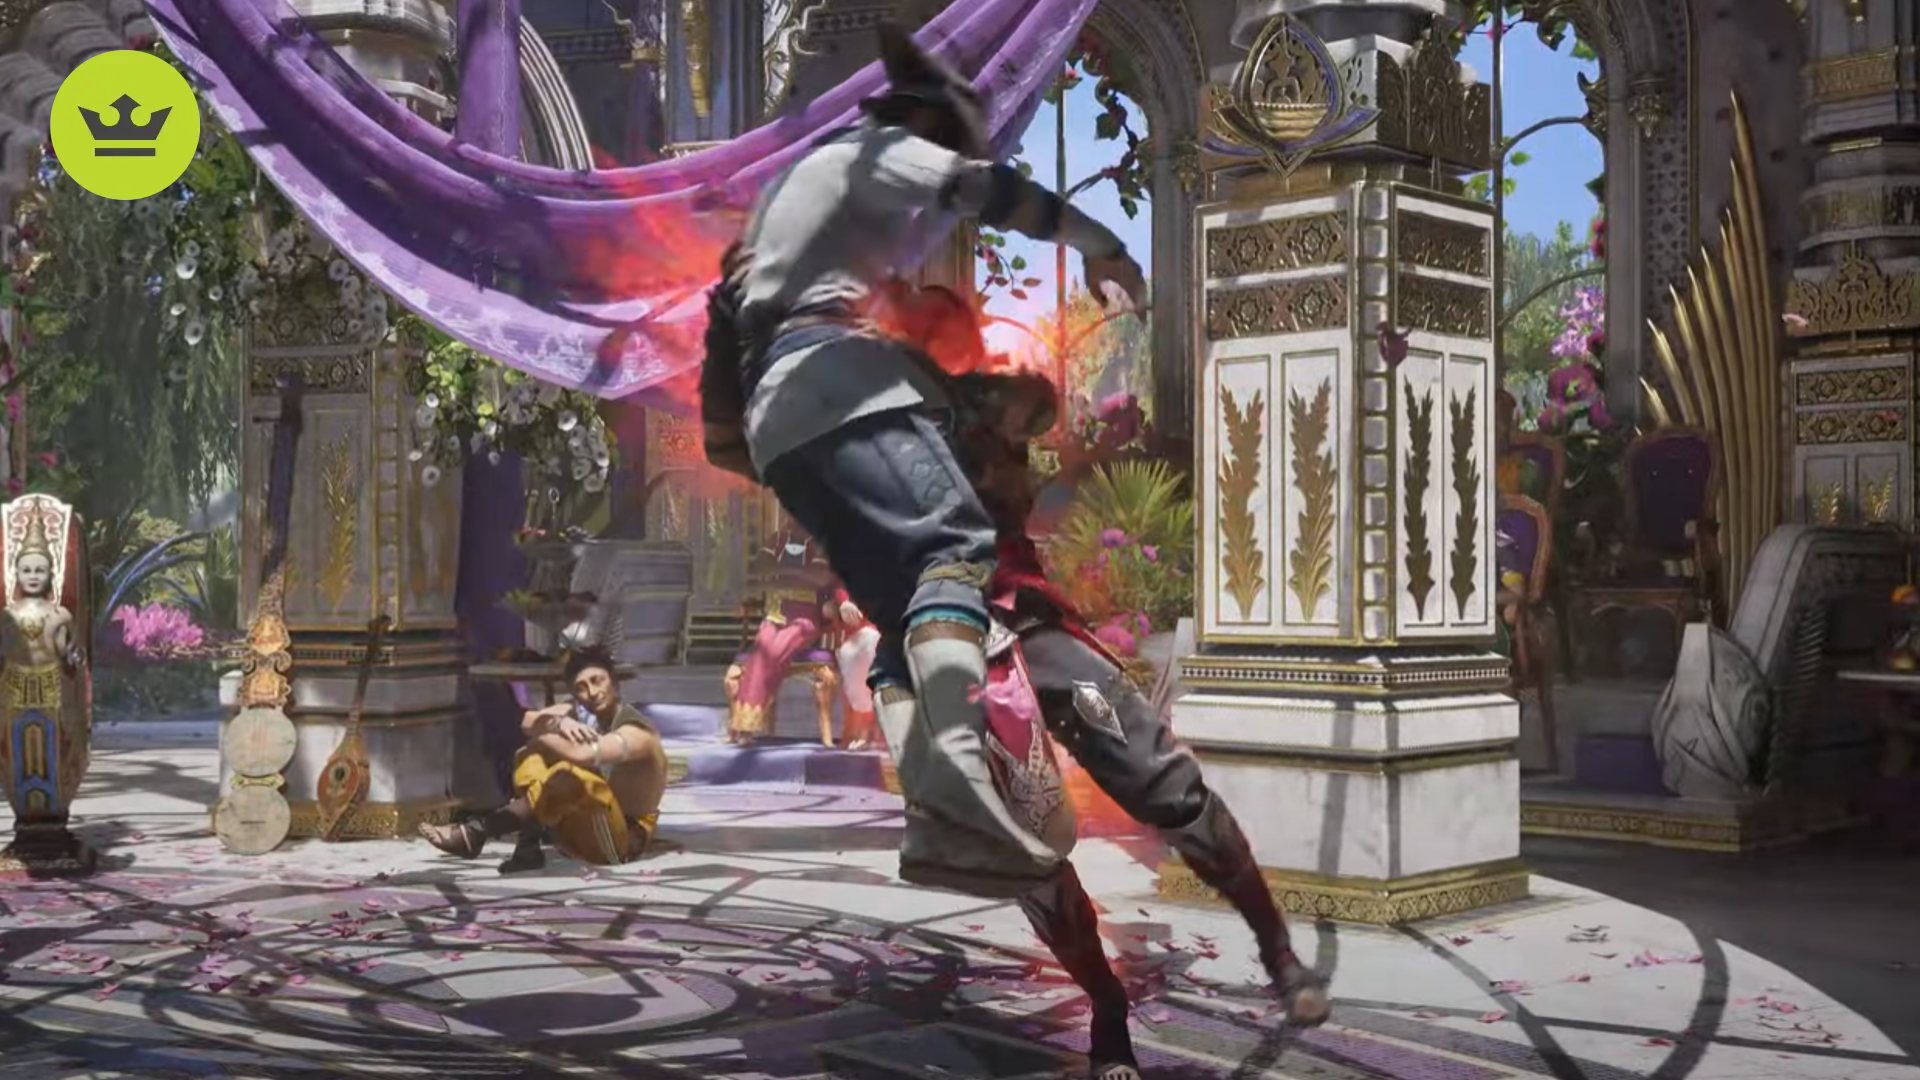 Mortal Kombat 1 characters: Reiko can be seen grabbing someone